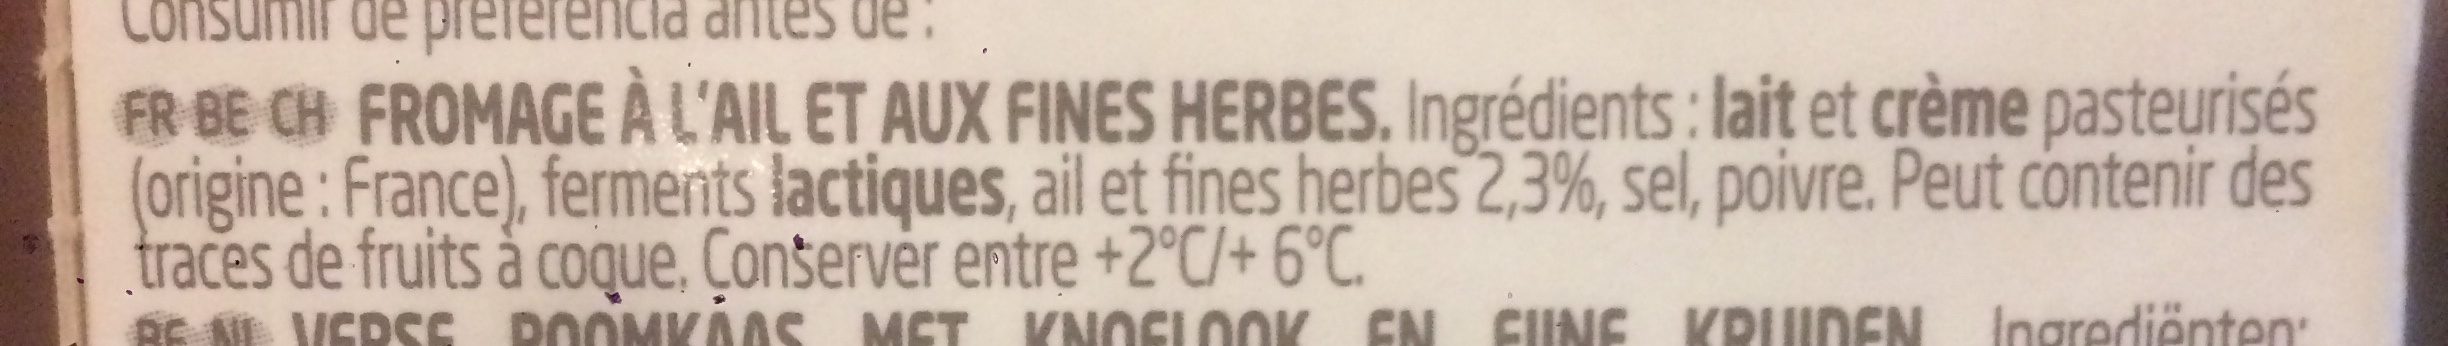 Garlic & Herbs - Ingredients - fr